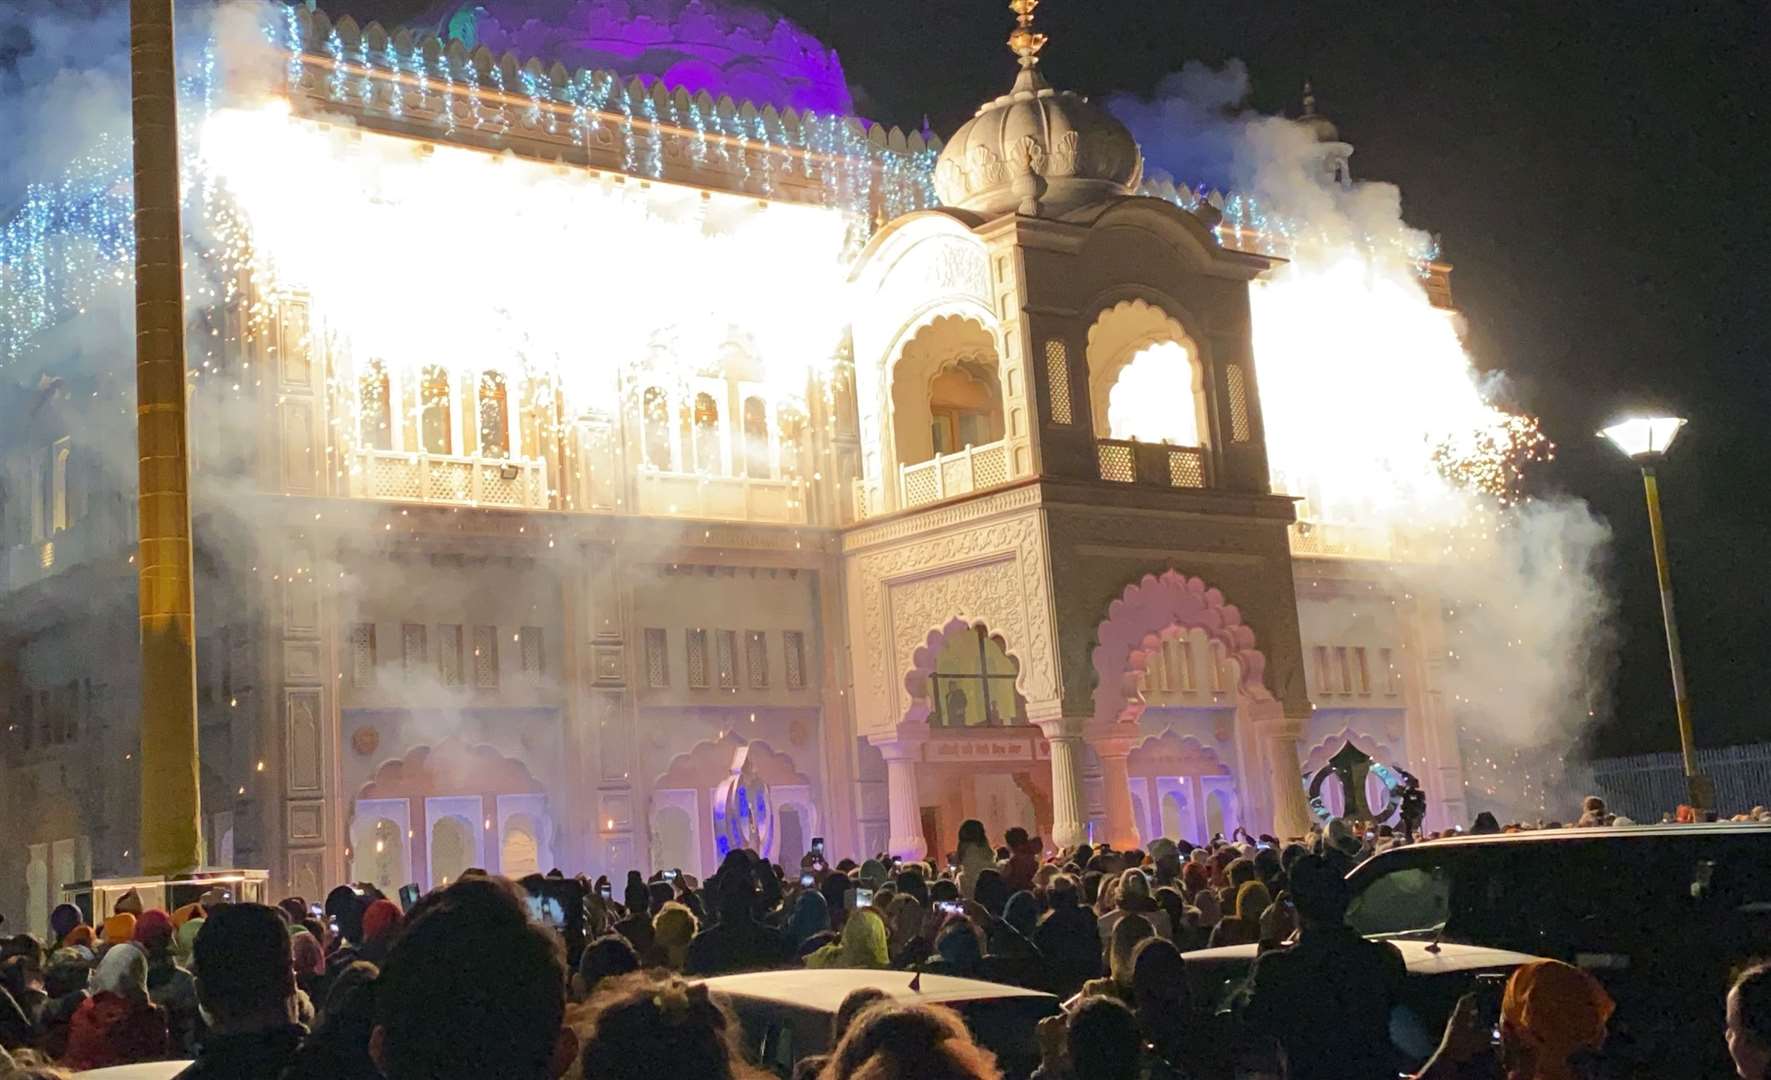 Gurdwara Gravesend celebrates Diwali